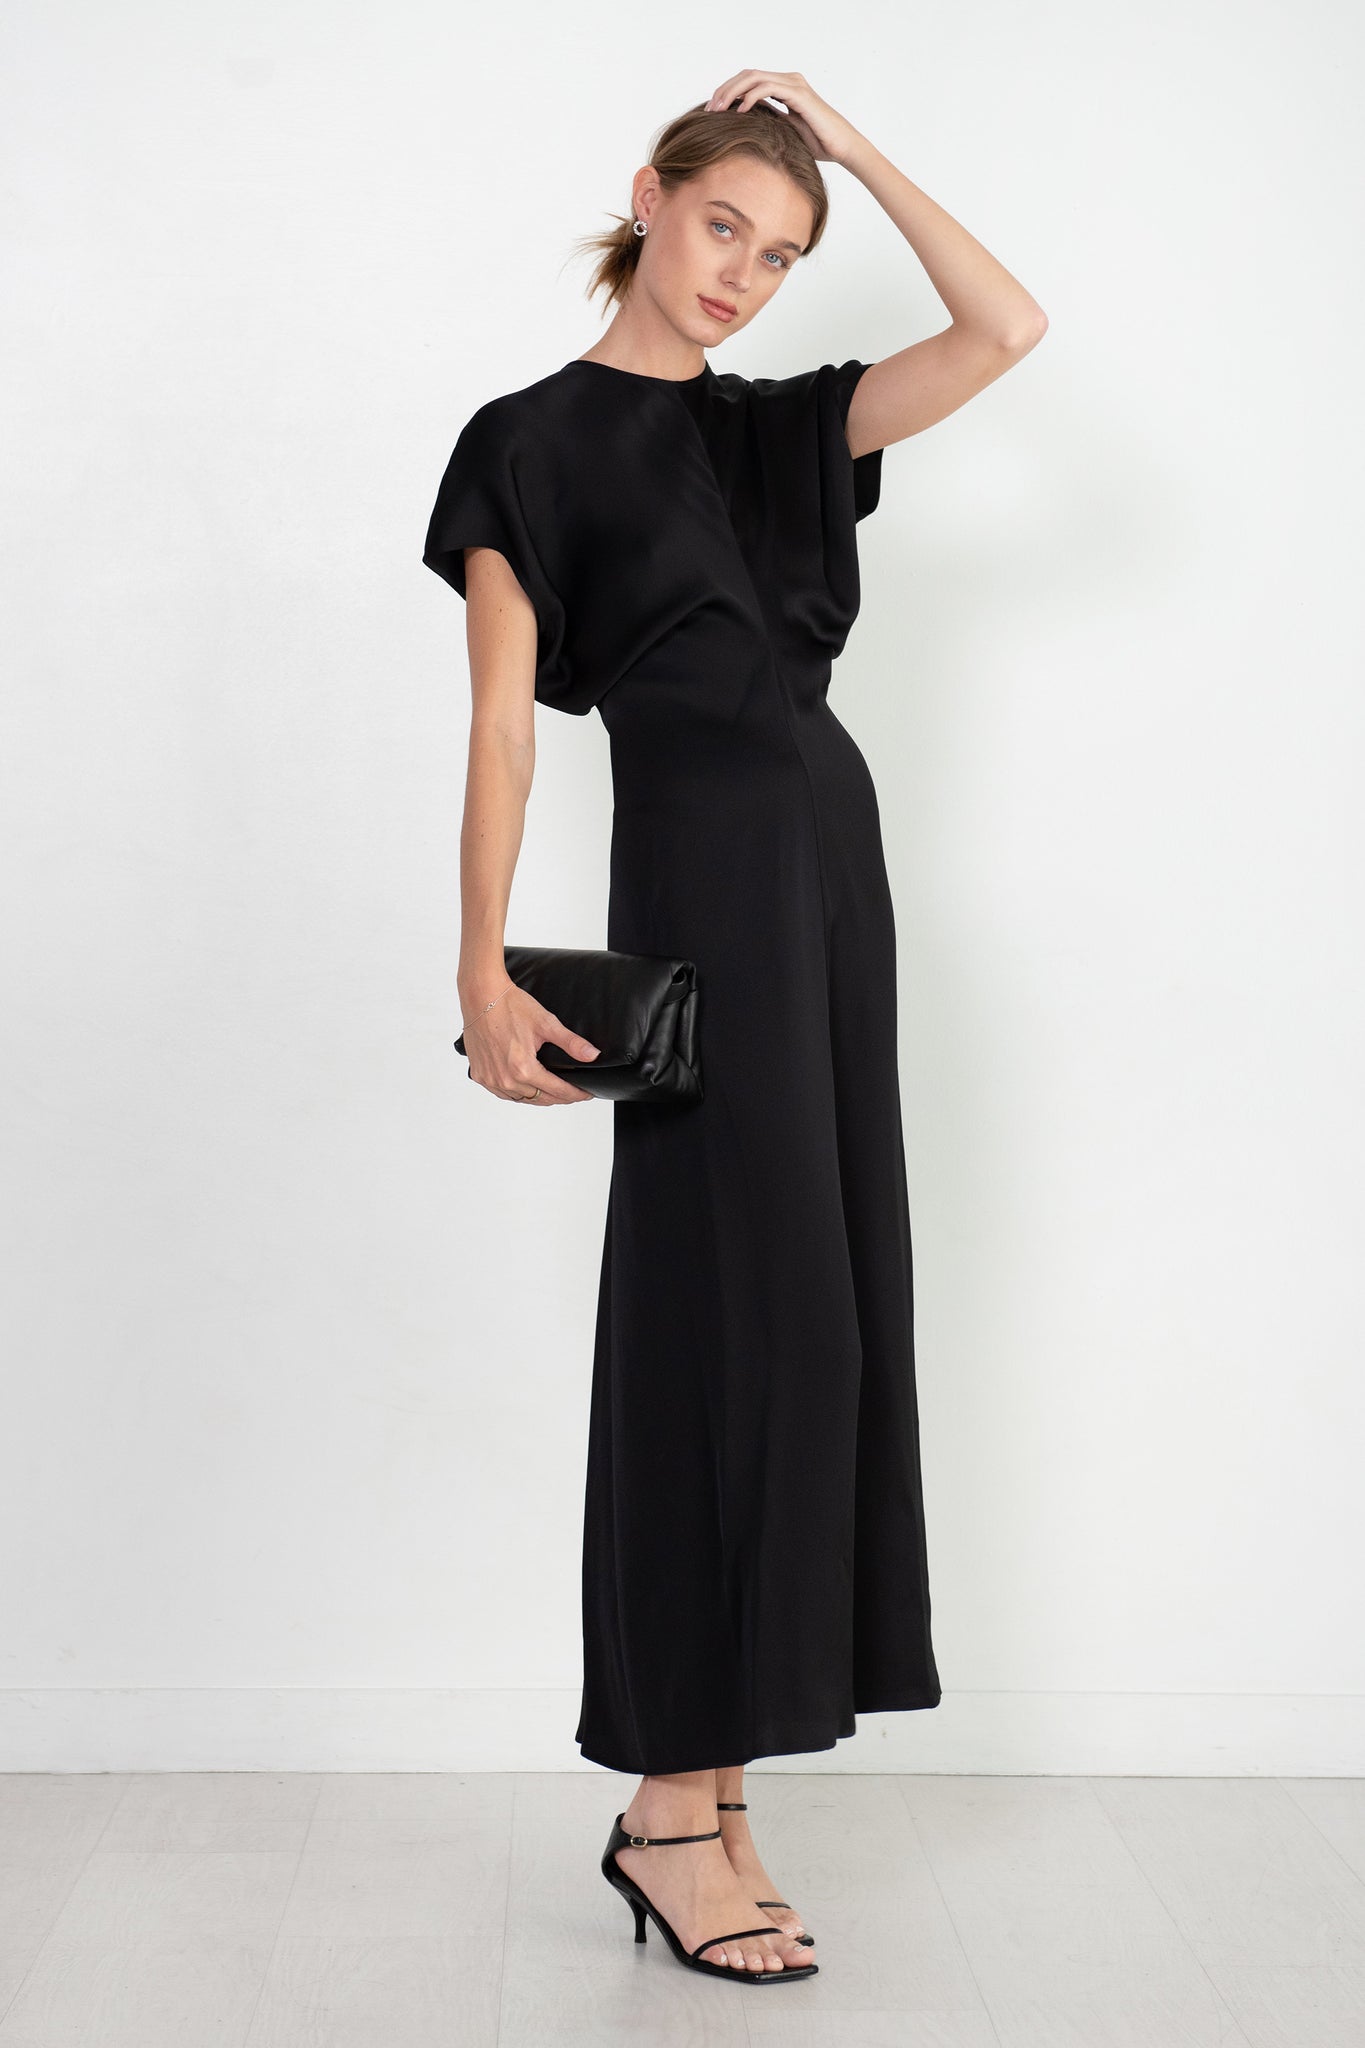 TOTEME - Slouch Waist Dress, Black